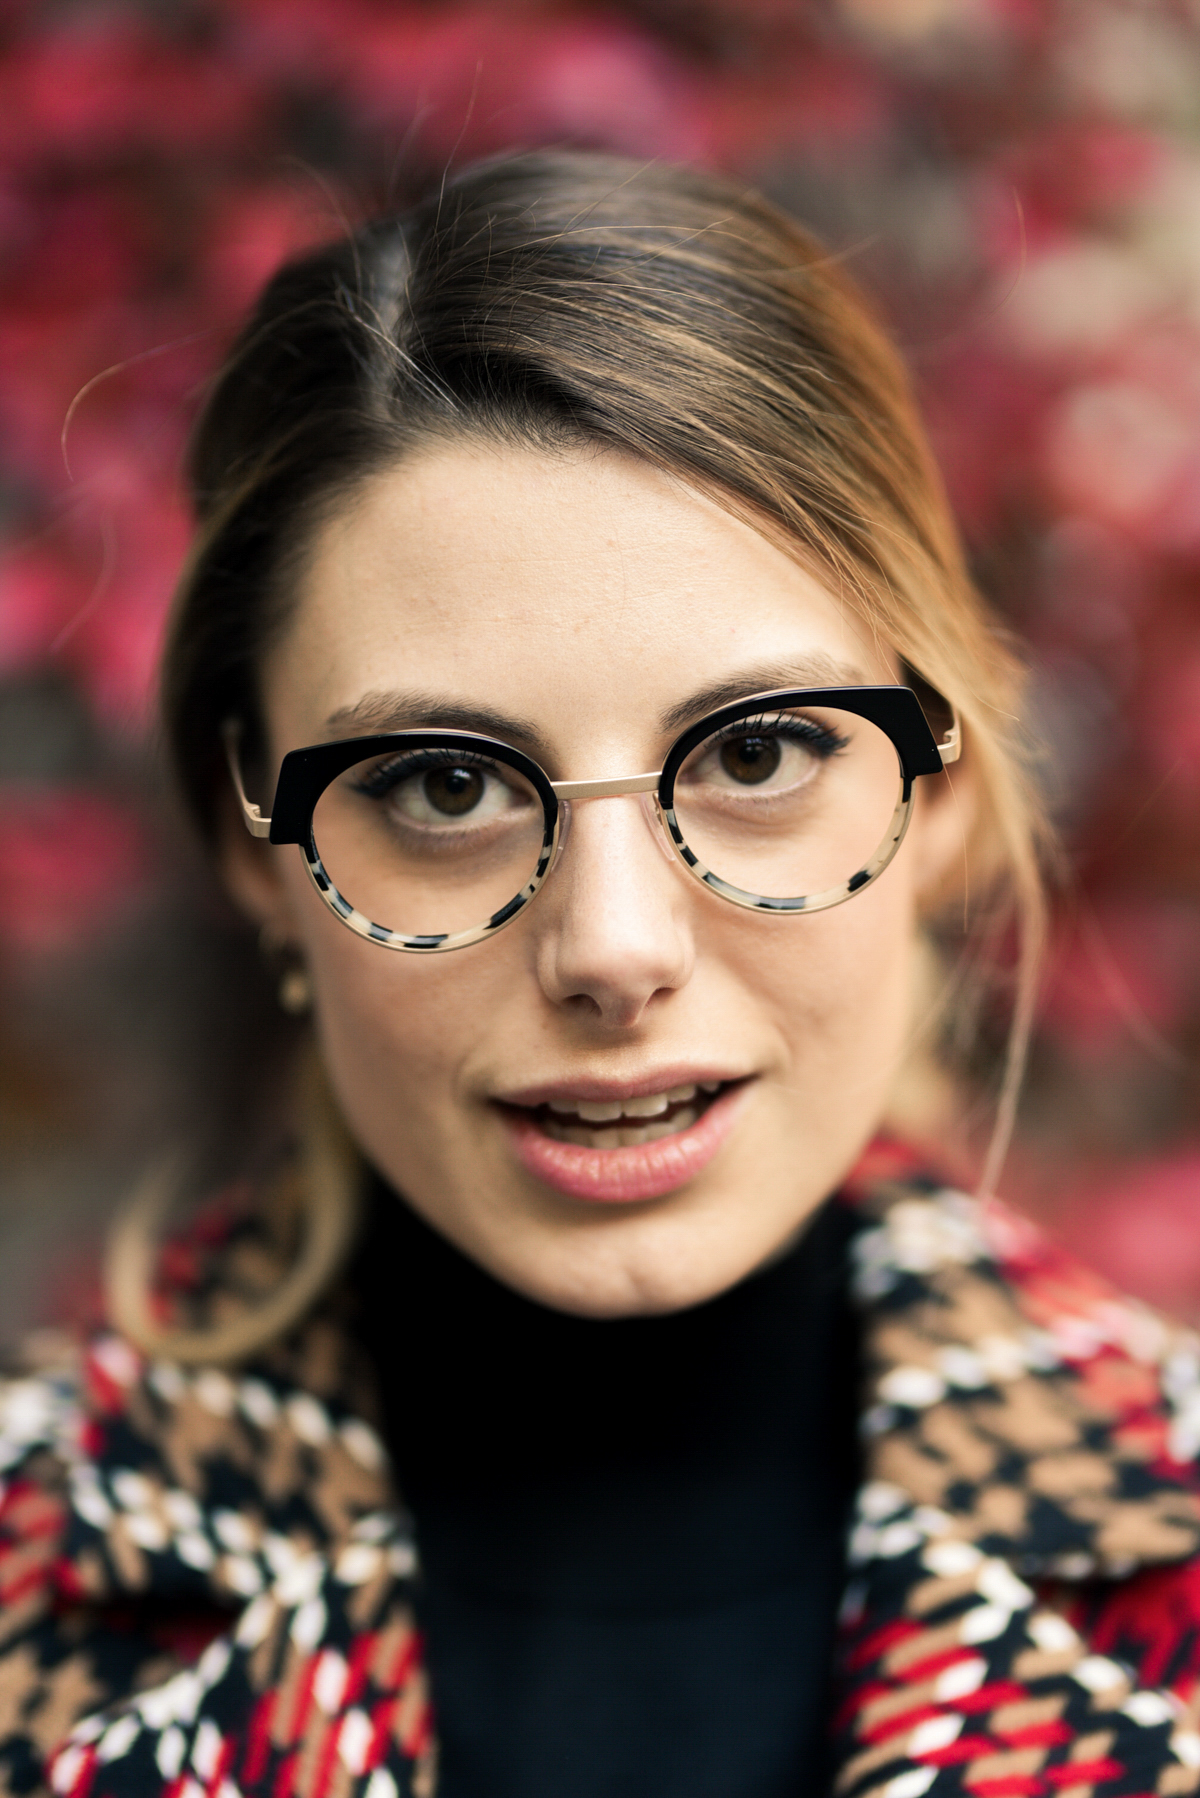 giulia de martin behind my glasses naoned french brand eyeglasses 2020 2019 -4